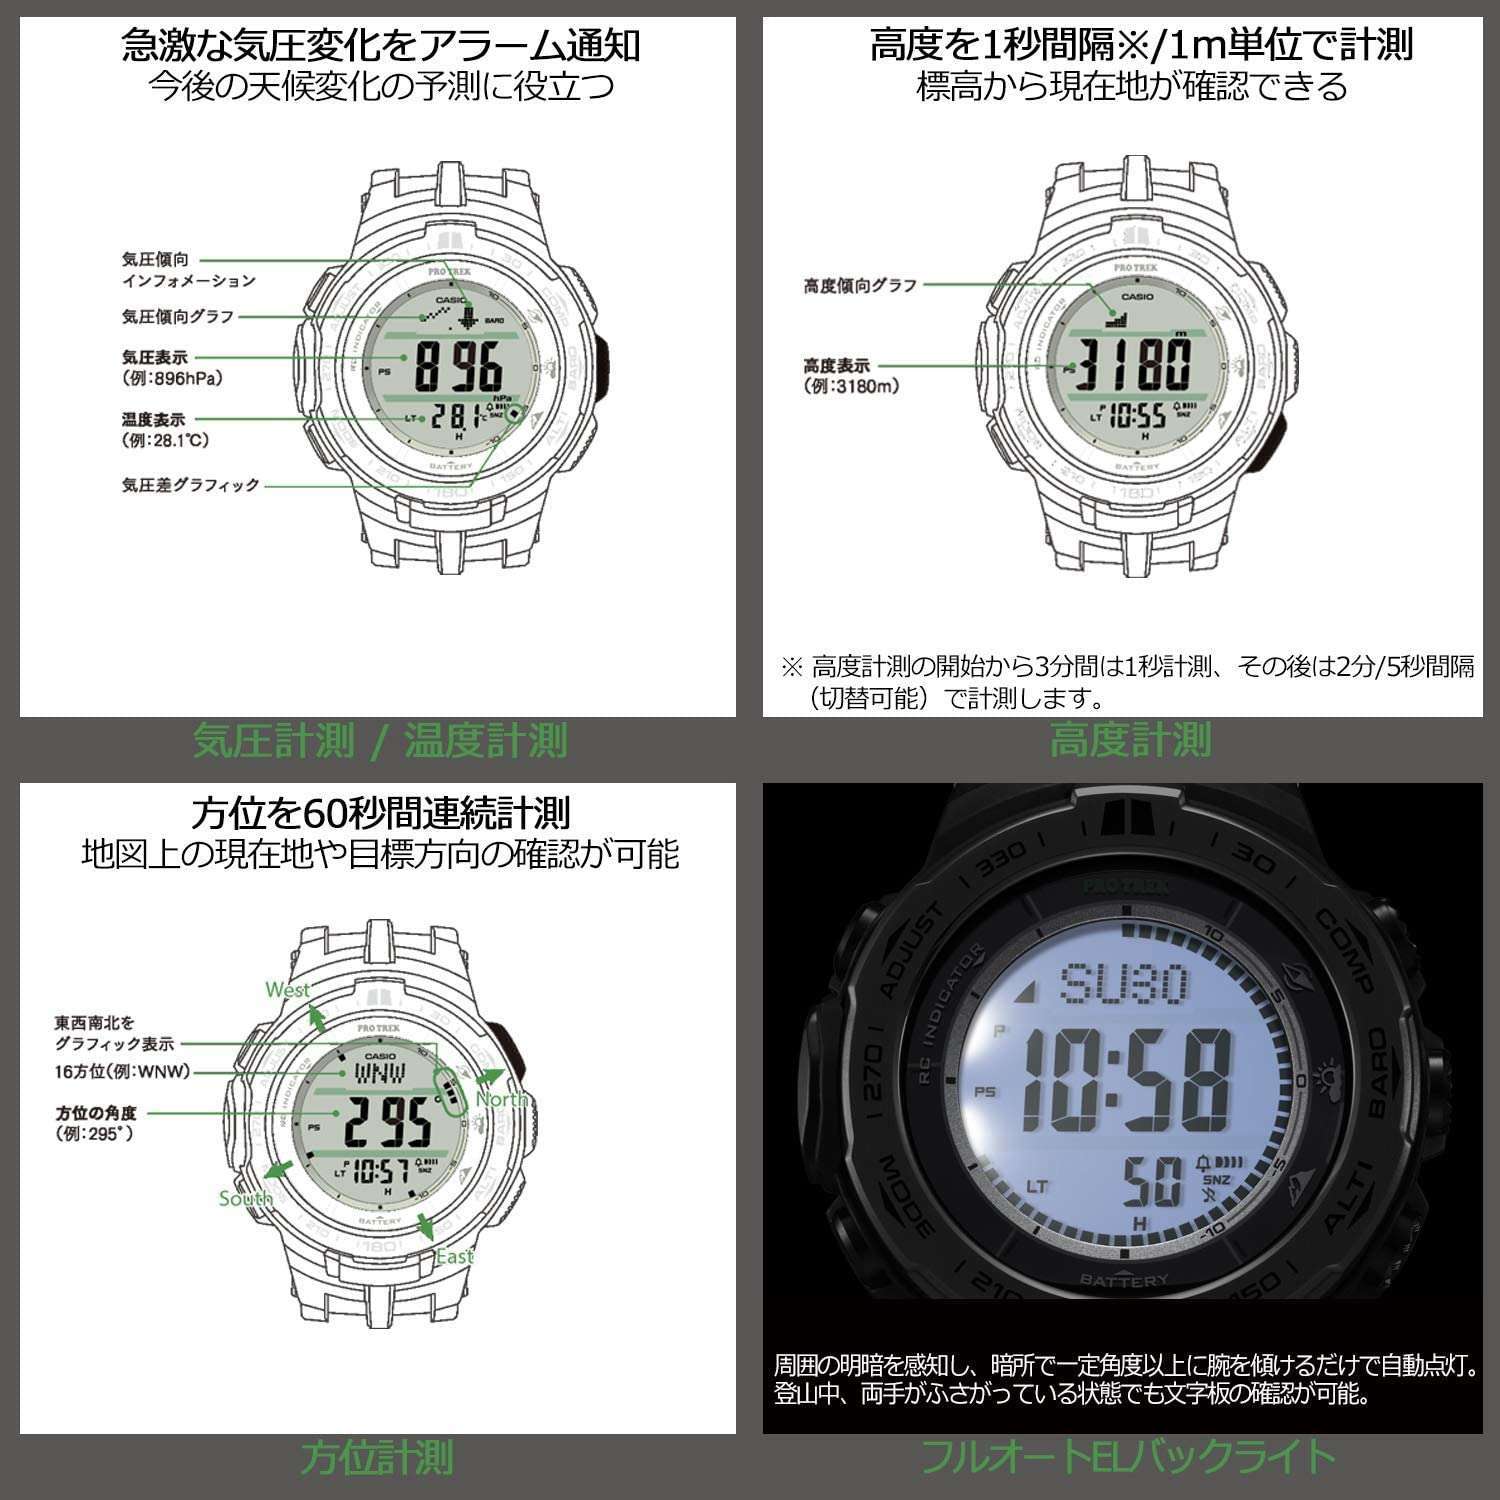 ROOK JAPAN:CASIO PROTREK CLIMBER LINE JDM MEN WATCH PRW-3100-1JF,JDM Watch,Casio Protrek